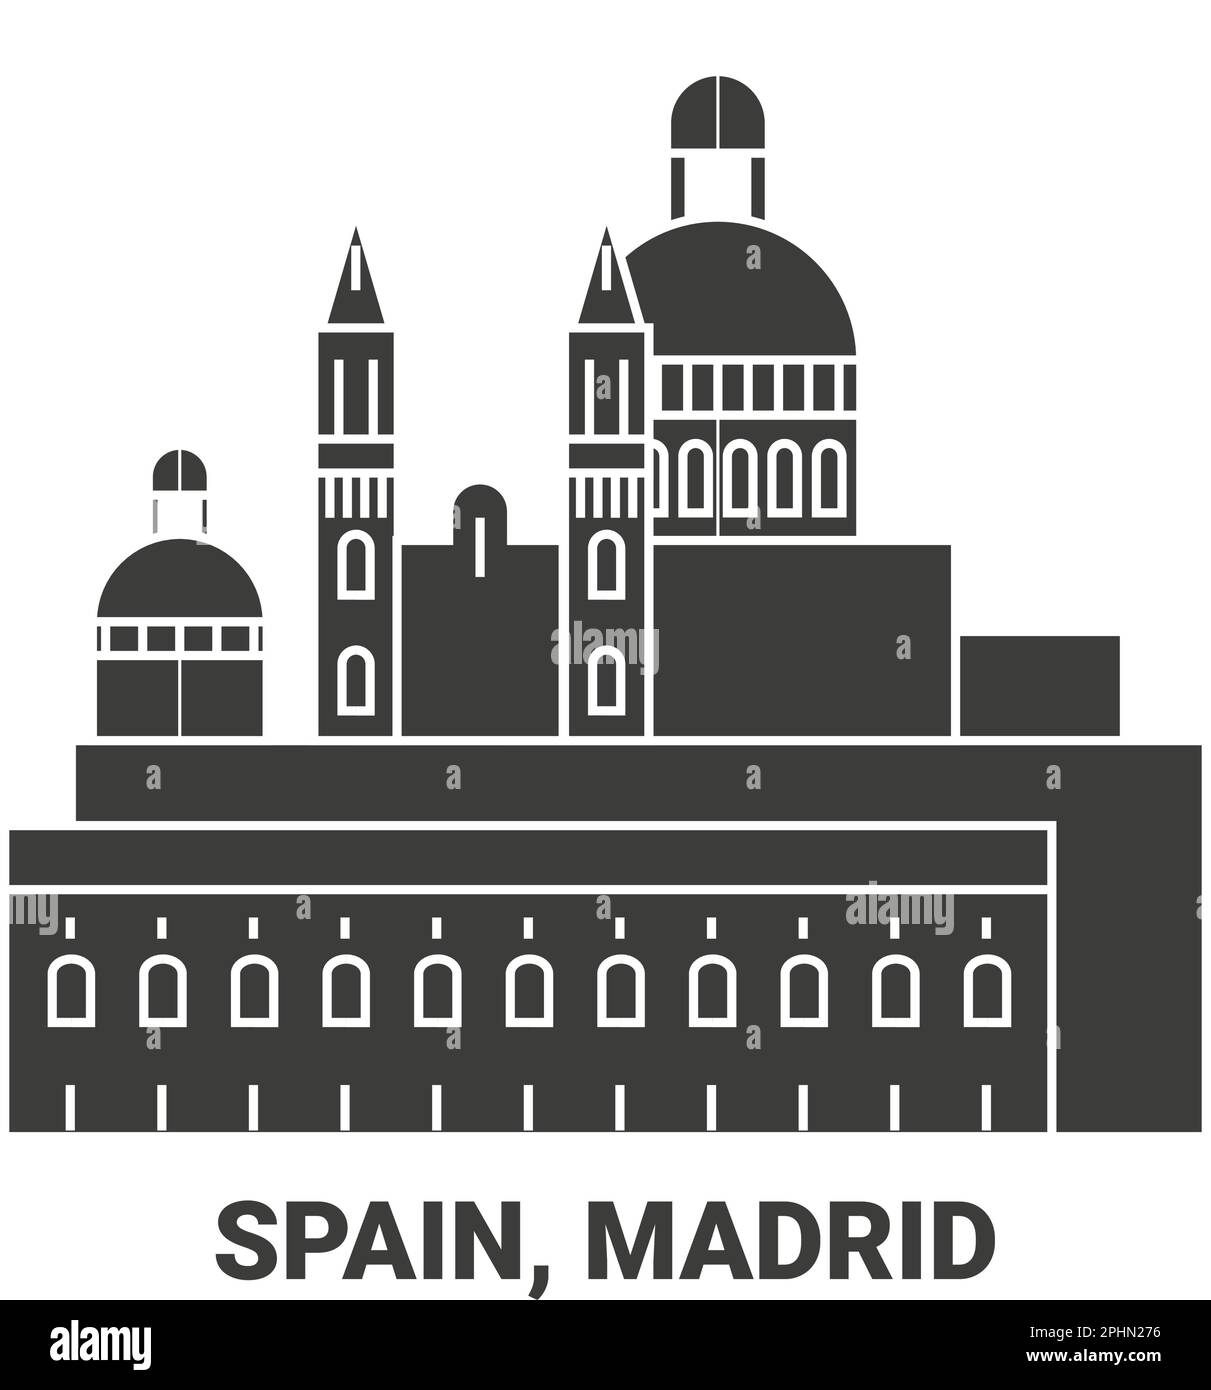 Spain, Madrid, Travels Landsmark travel landmark vector illustration Stock Vector